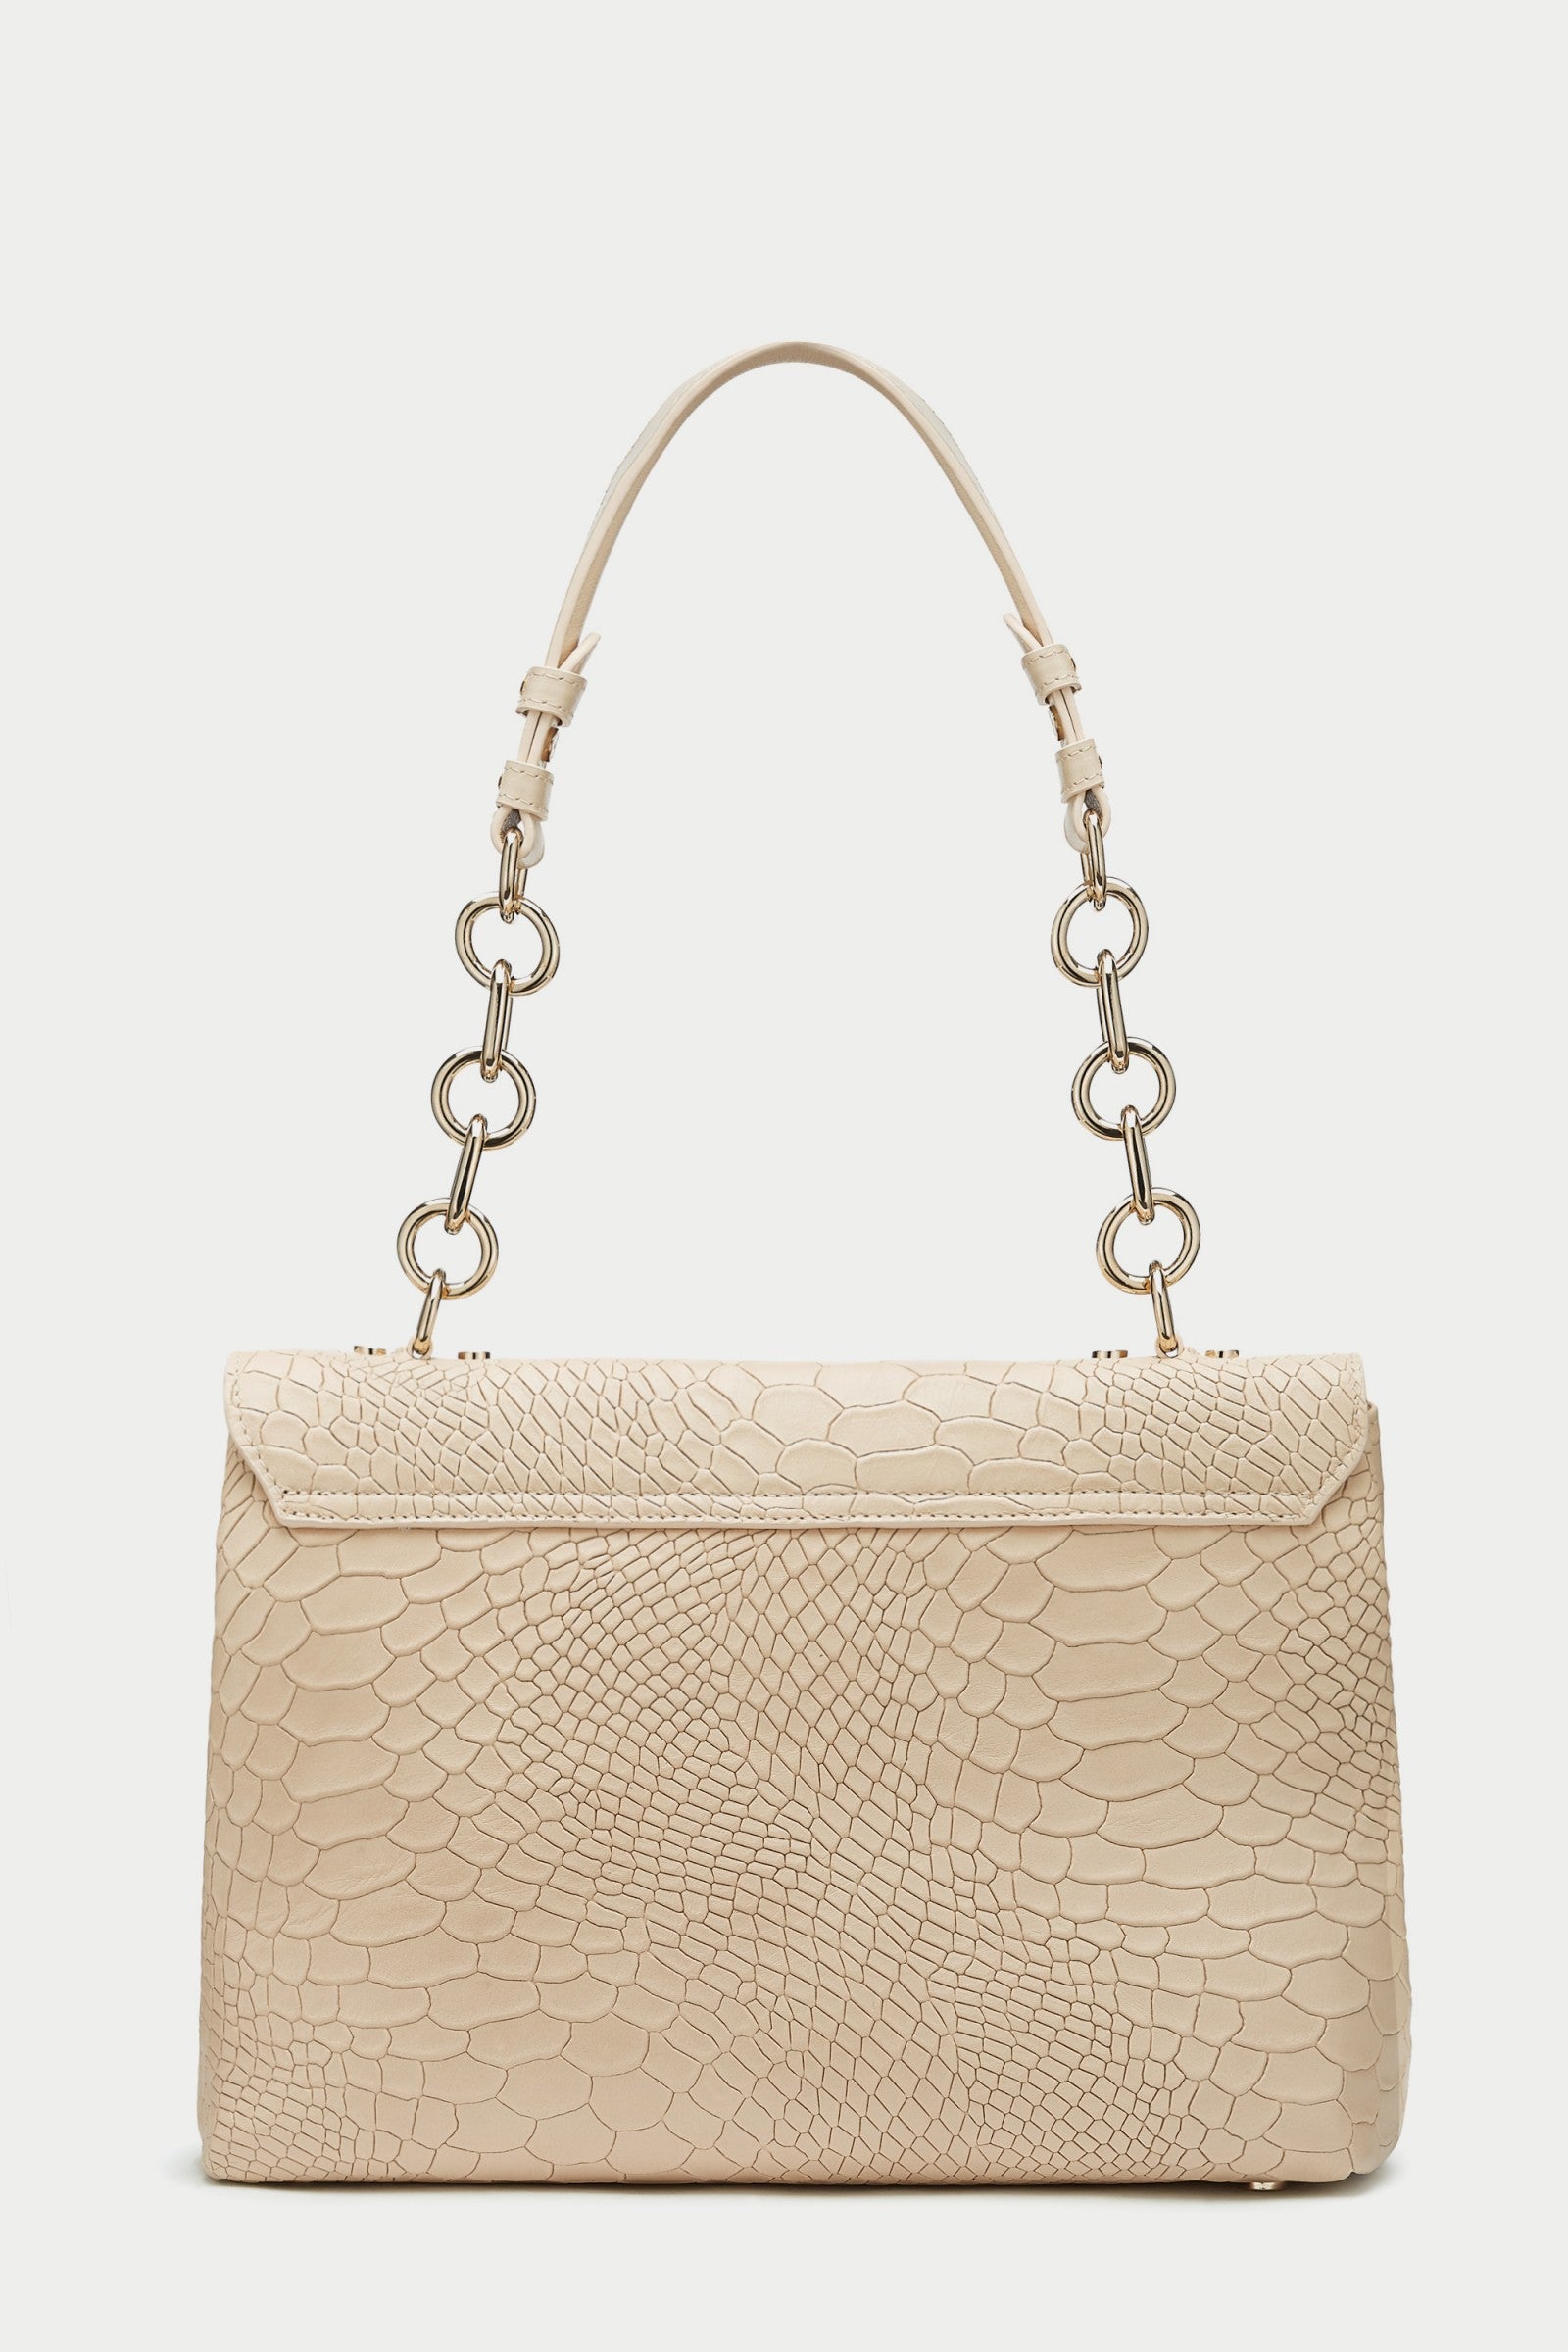 Briella SABBIA Cream Leather Handbag